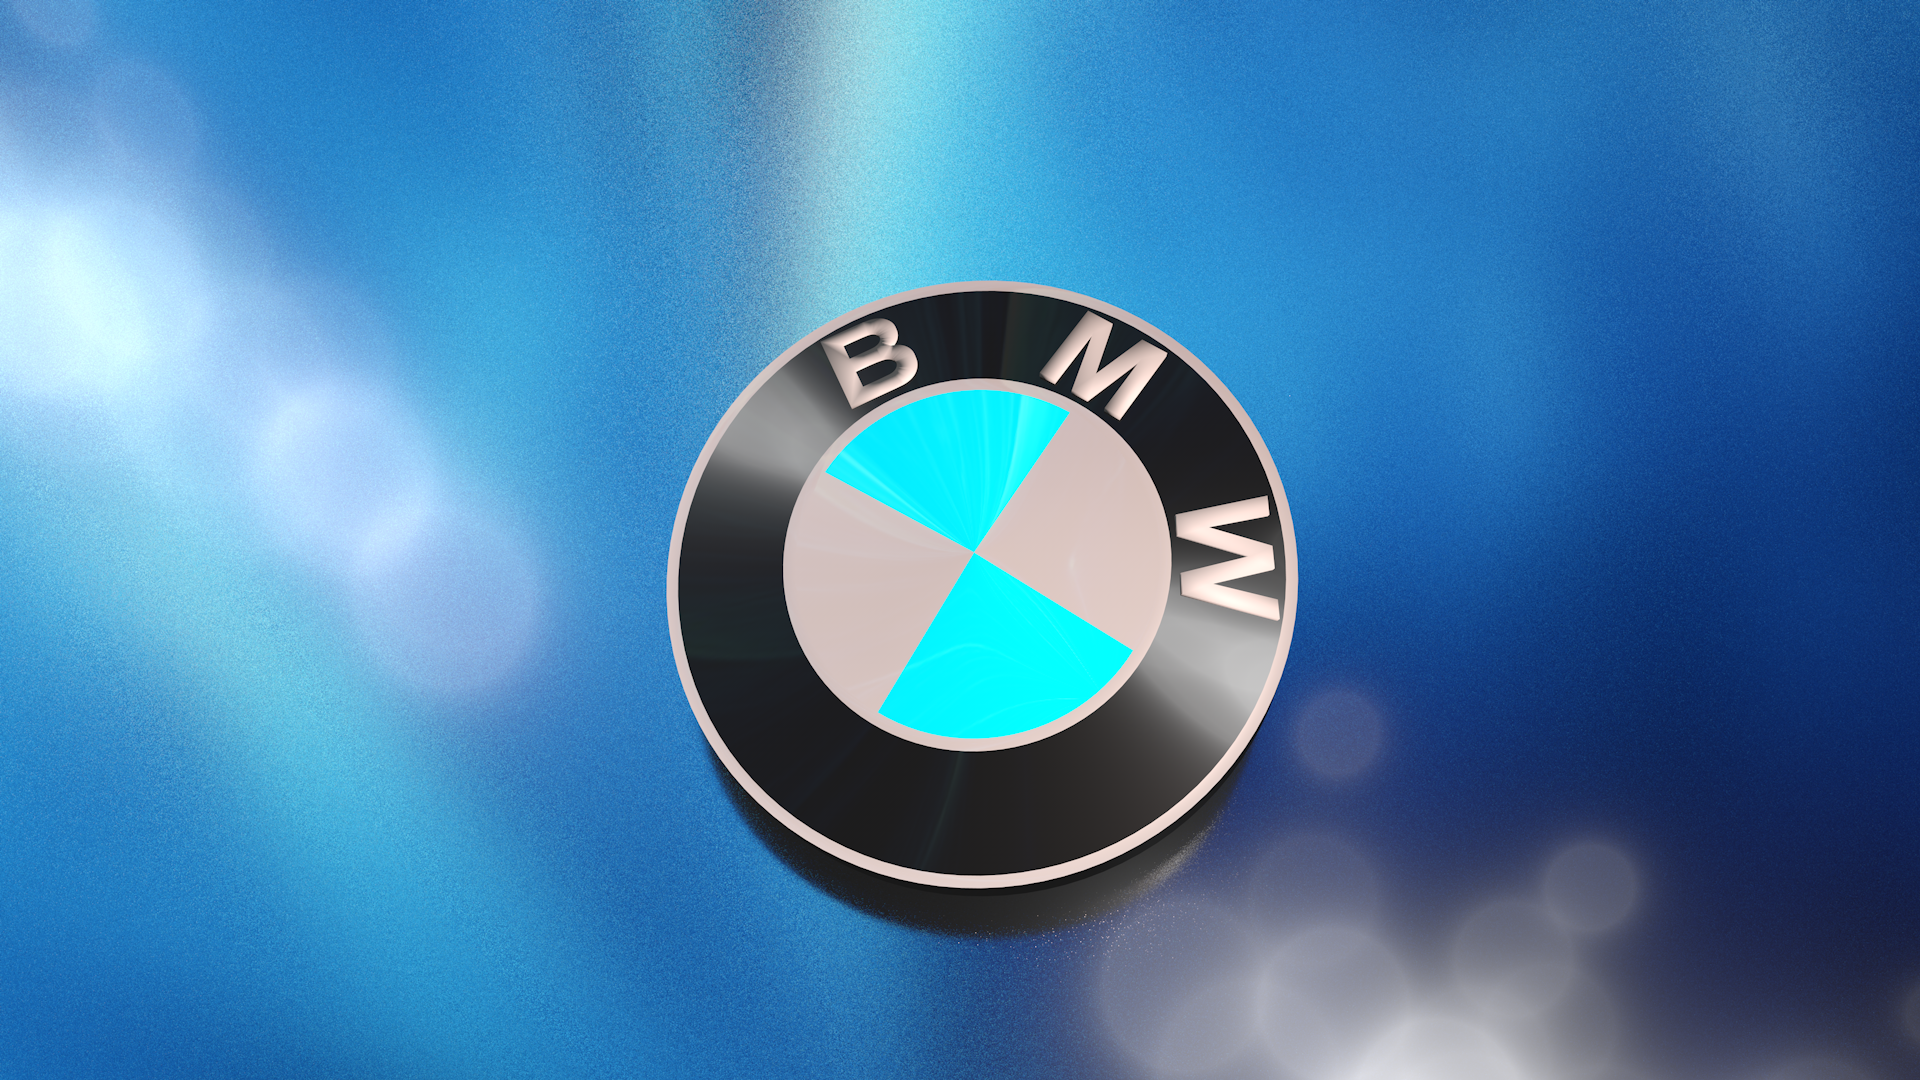 Bmw logo HD wallpapers | Pxfuel